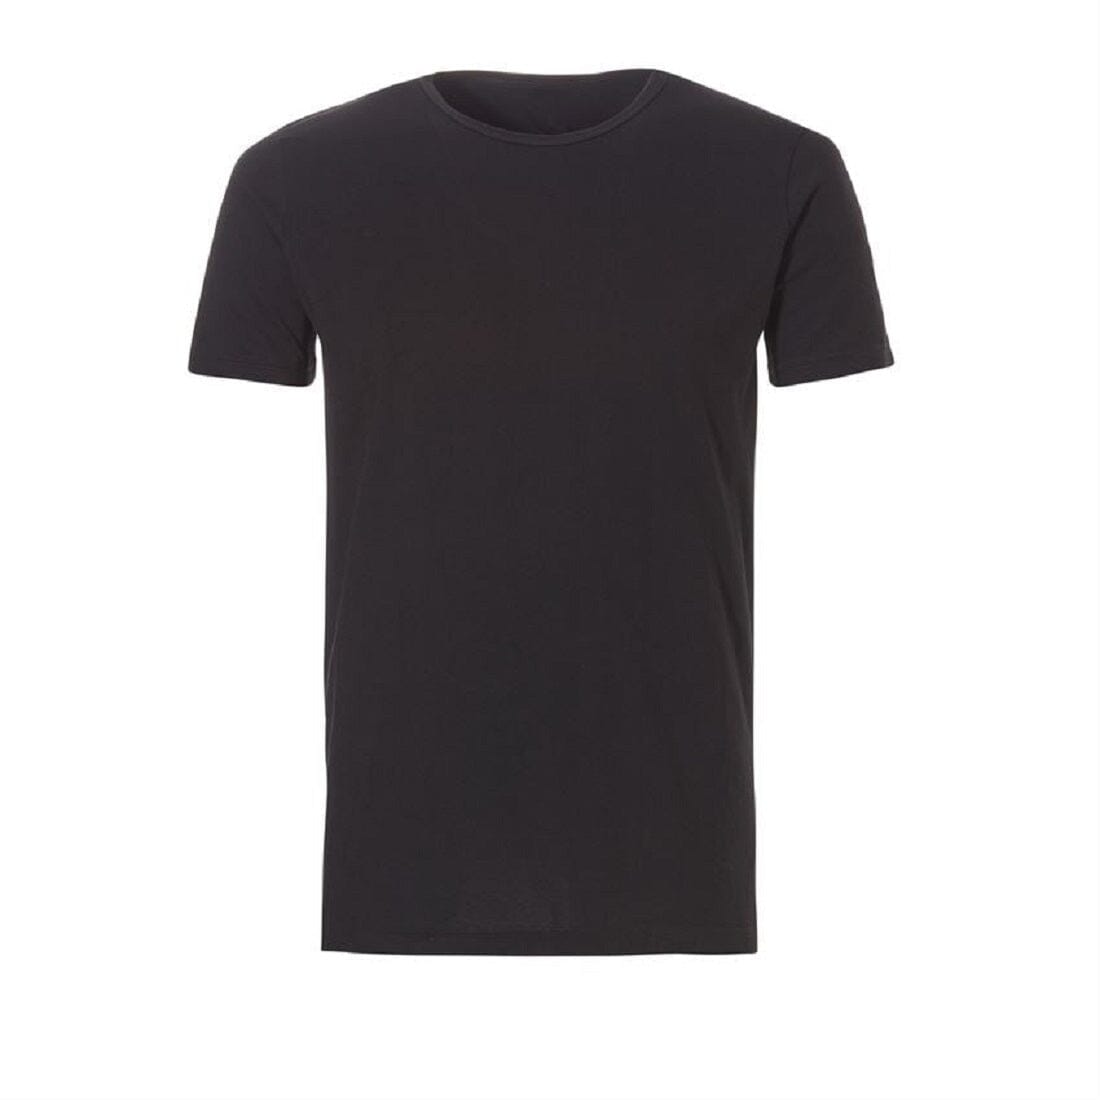 Ten Cate - 30868 - Basic T-Shirt 2-pack - Black Shirt Ten Cate 